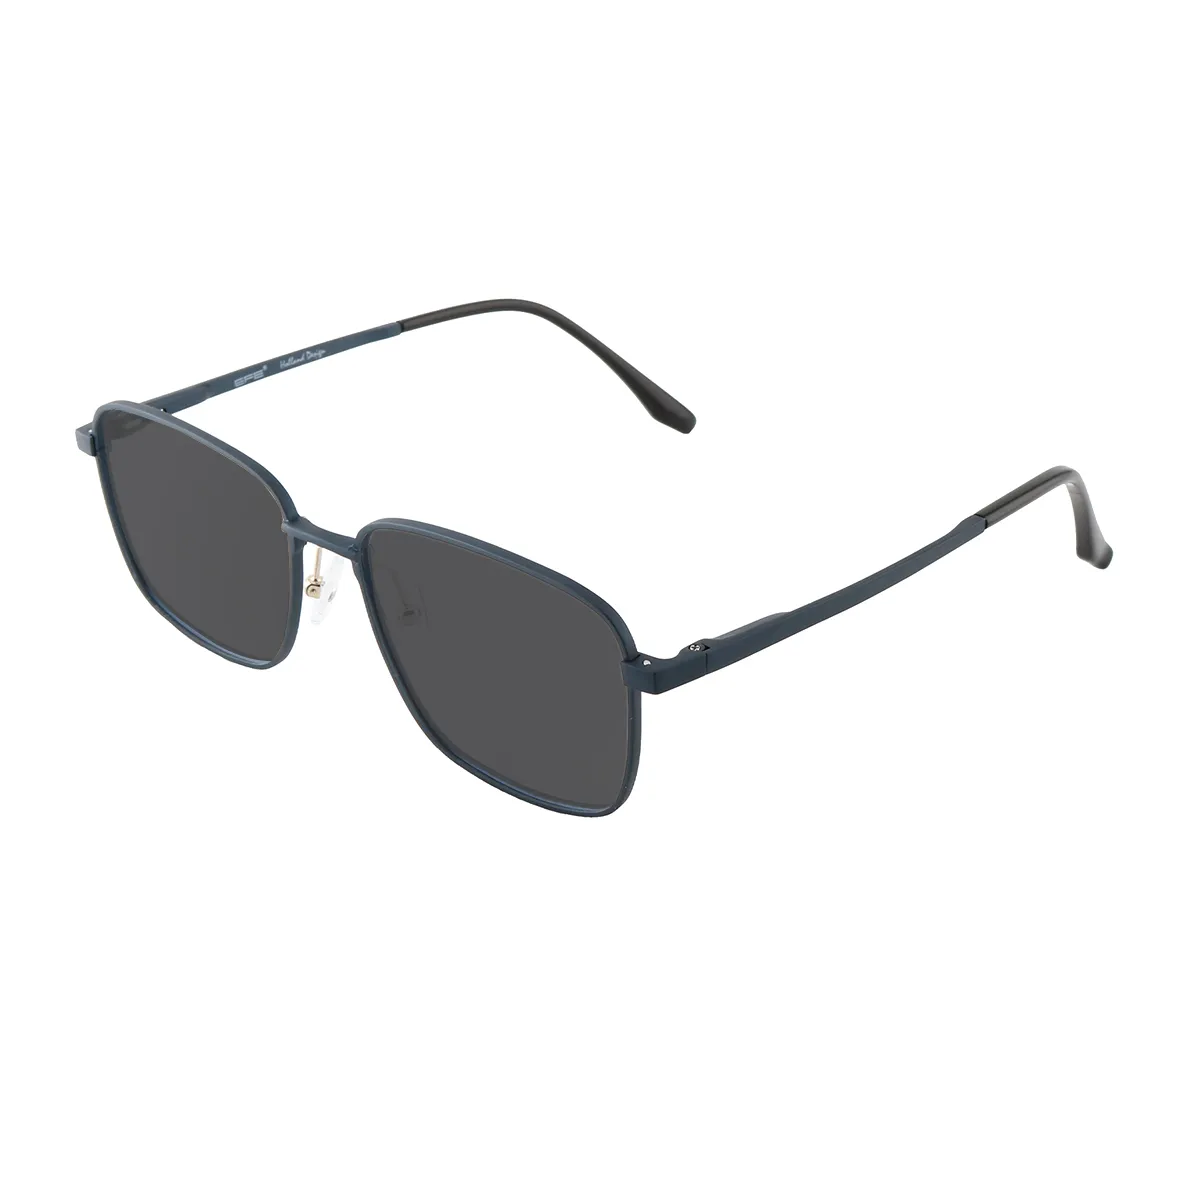 Jonas - Square Blue Sunglasses for Men